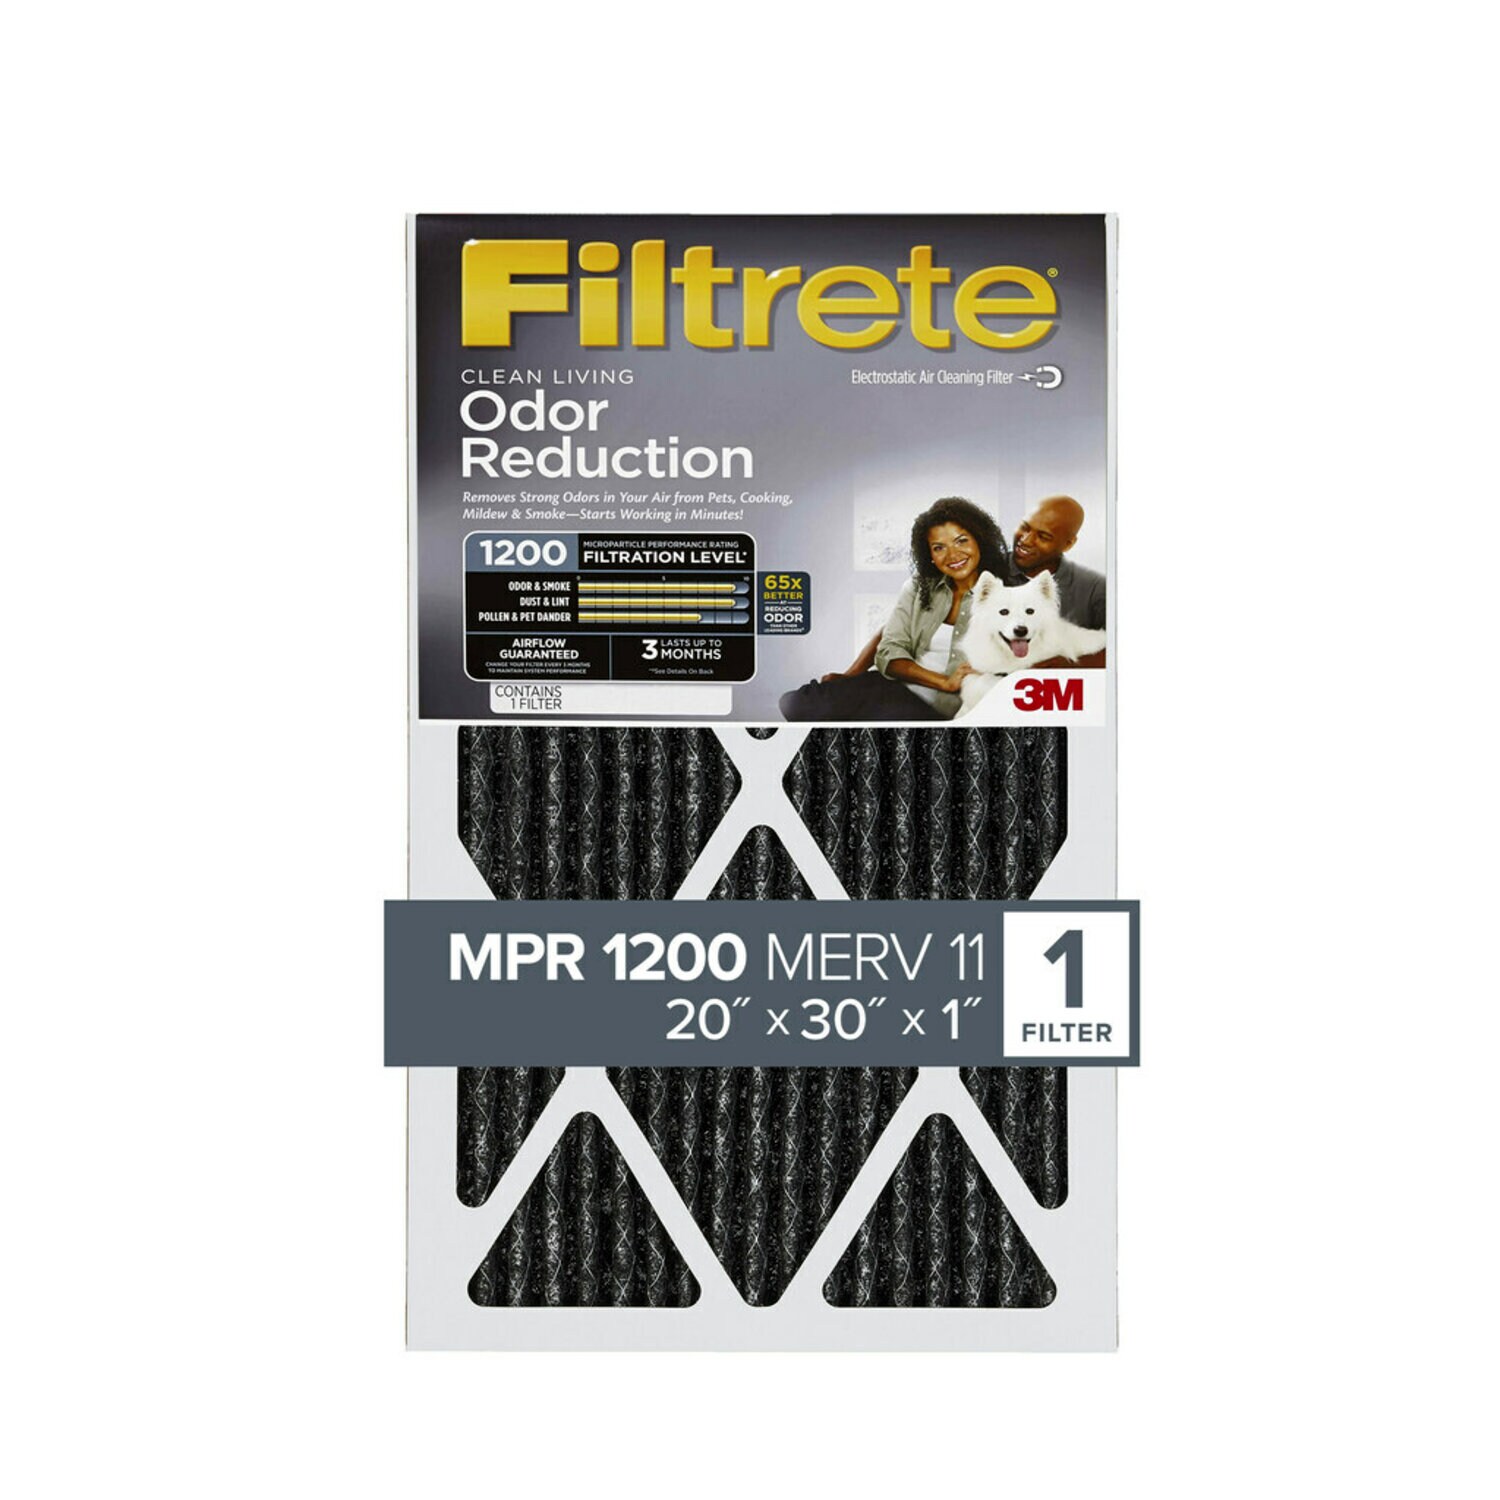 7010371355 - Filtrete Home Odor Reduction Filter HOME22-4, 20 in x 30 in x 1 in
(50,8 cm x 76,2 cm x 2,5 cm)